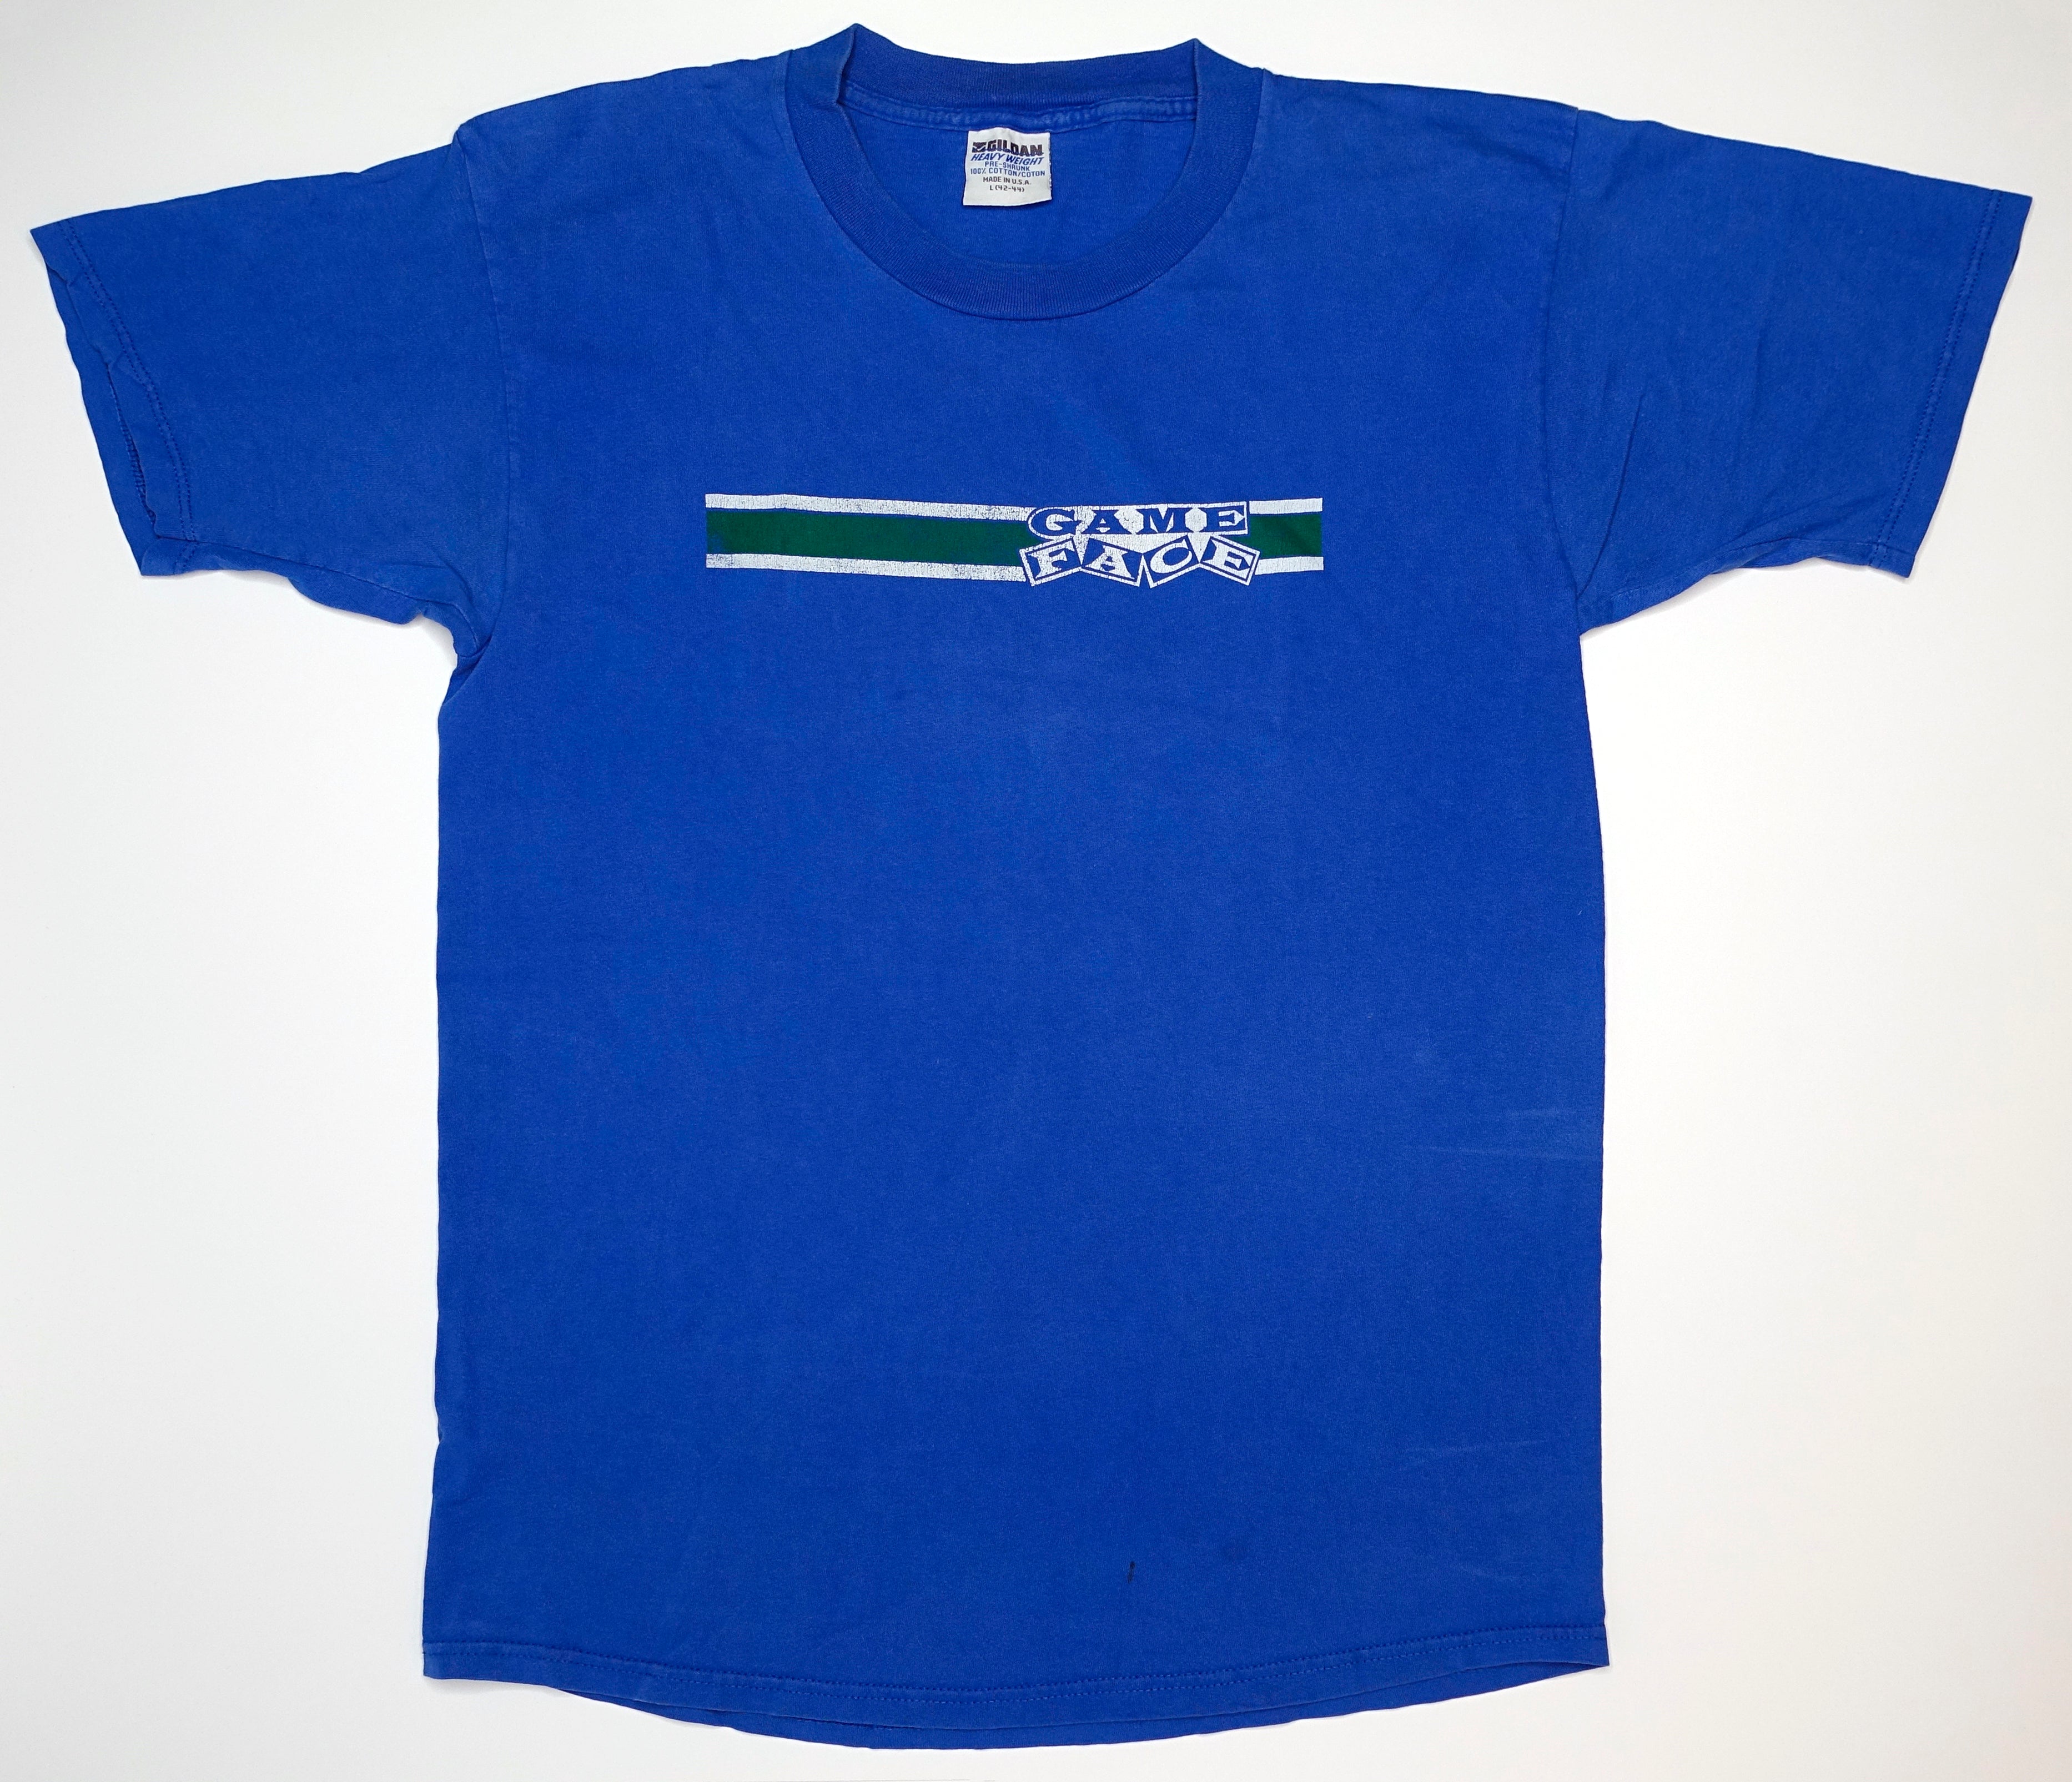 Gameface - Start Me Over 1995 Tour Shirt Size Large